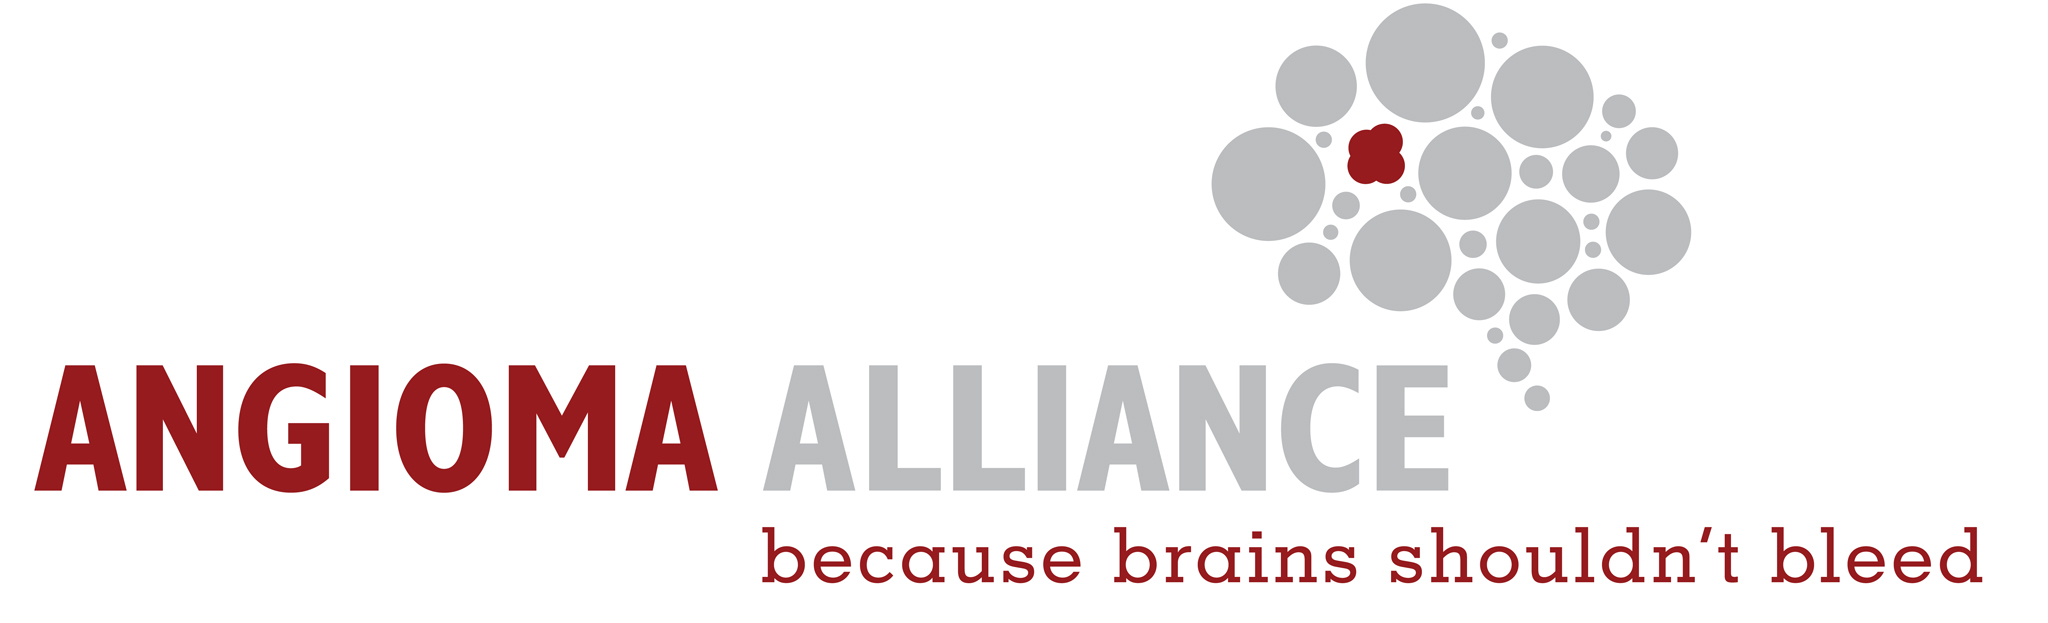 Angioma Alliance long logo